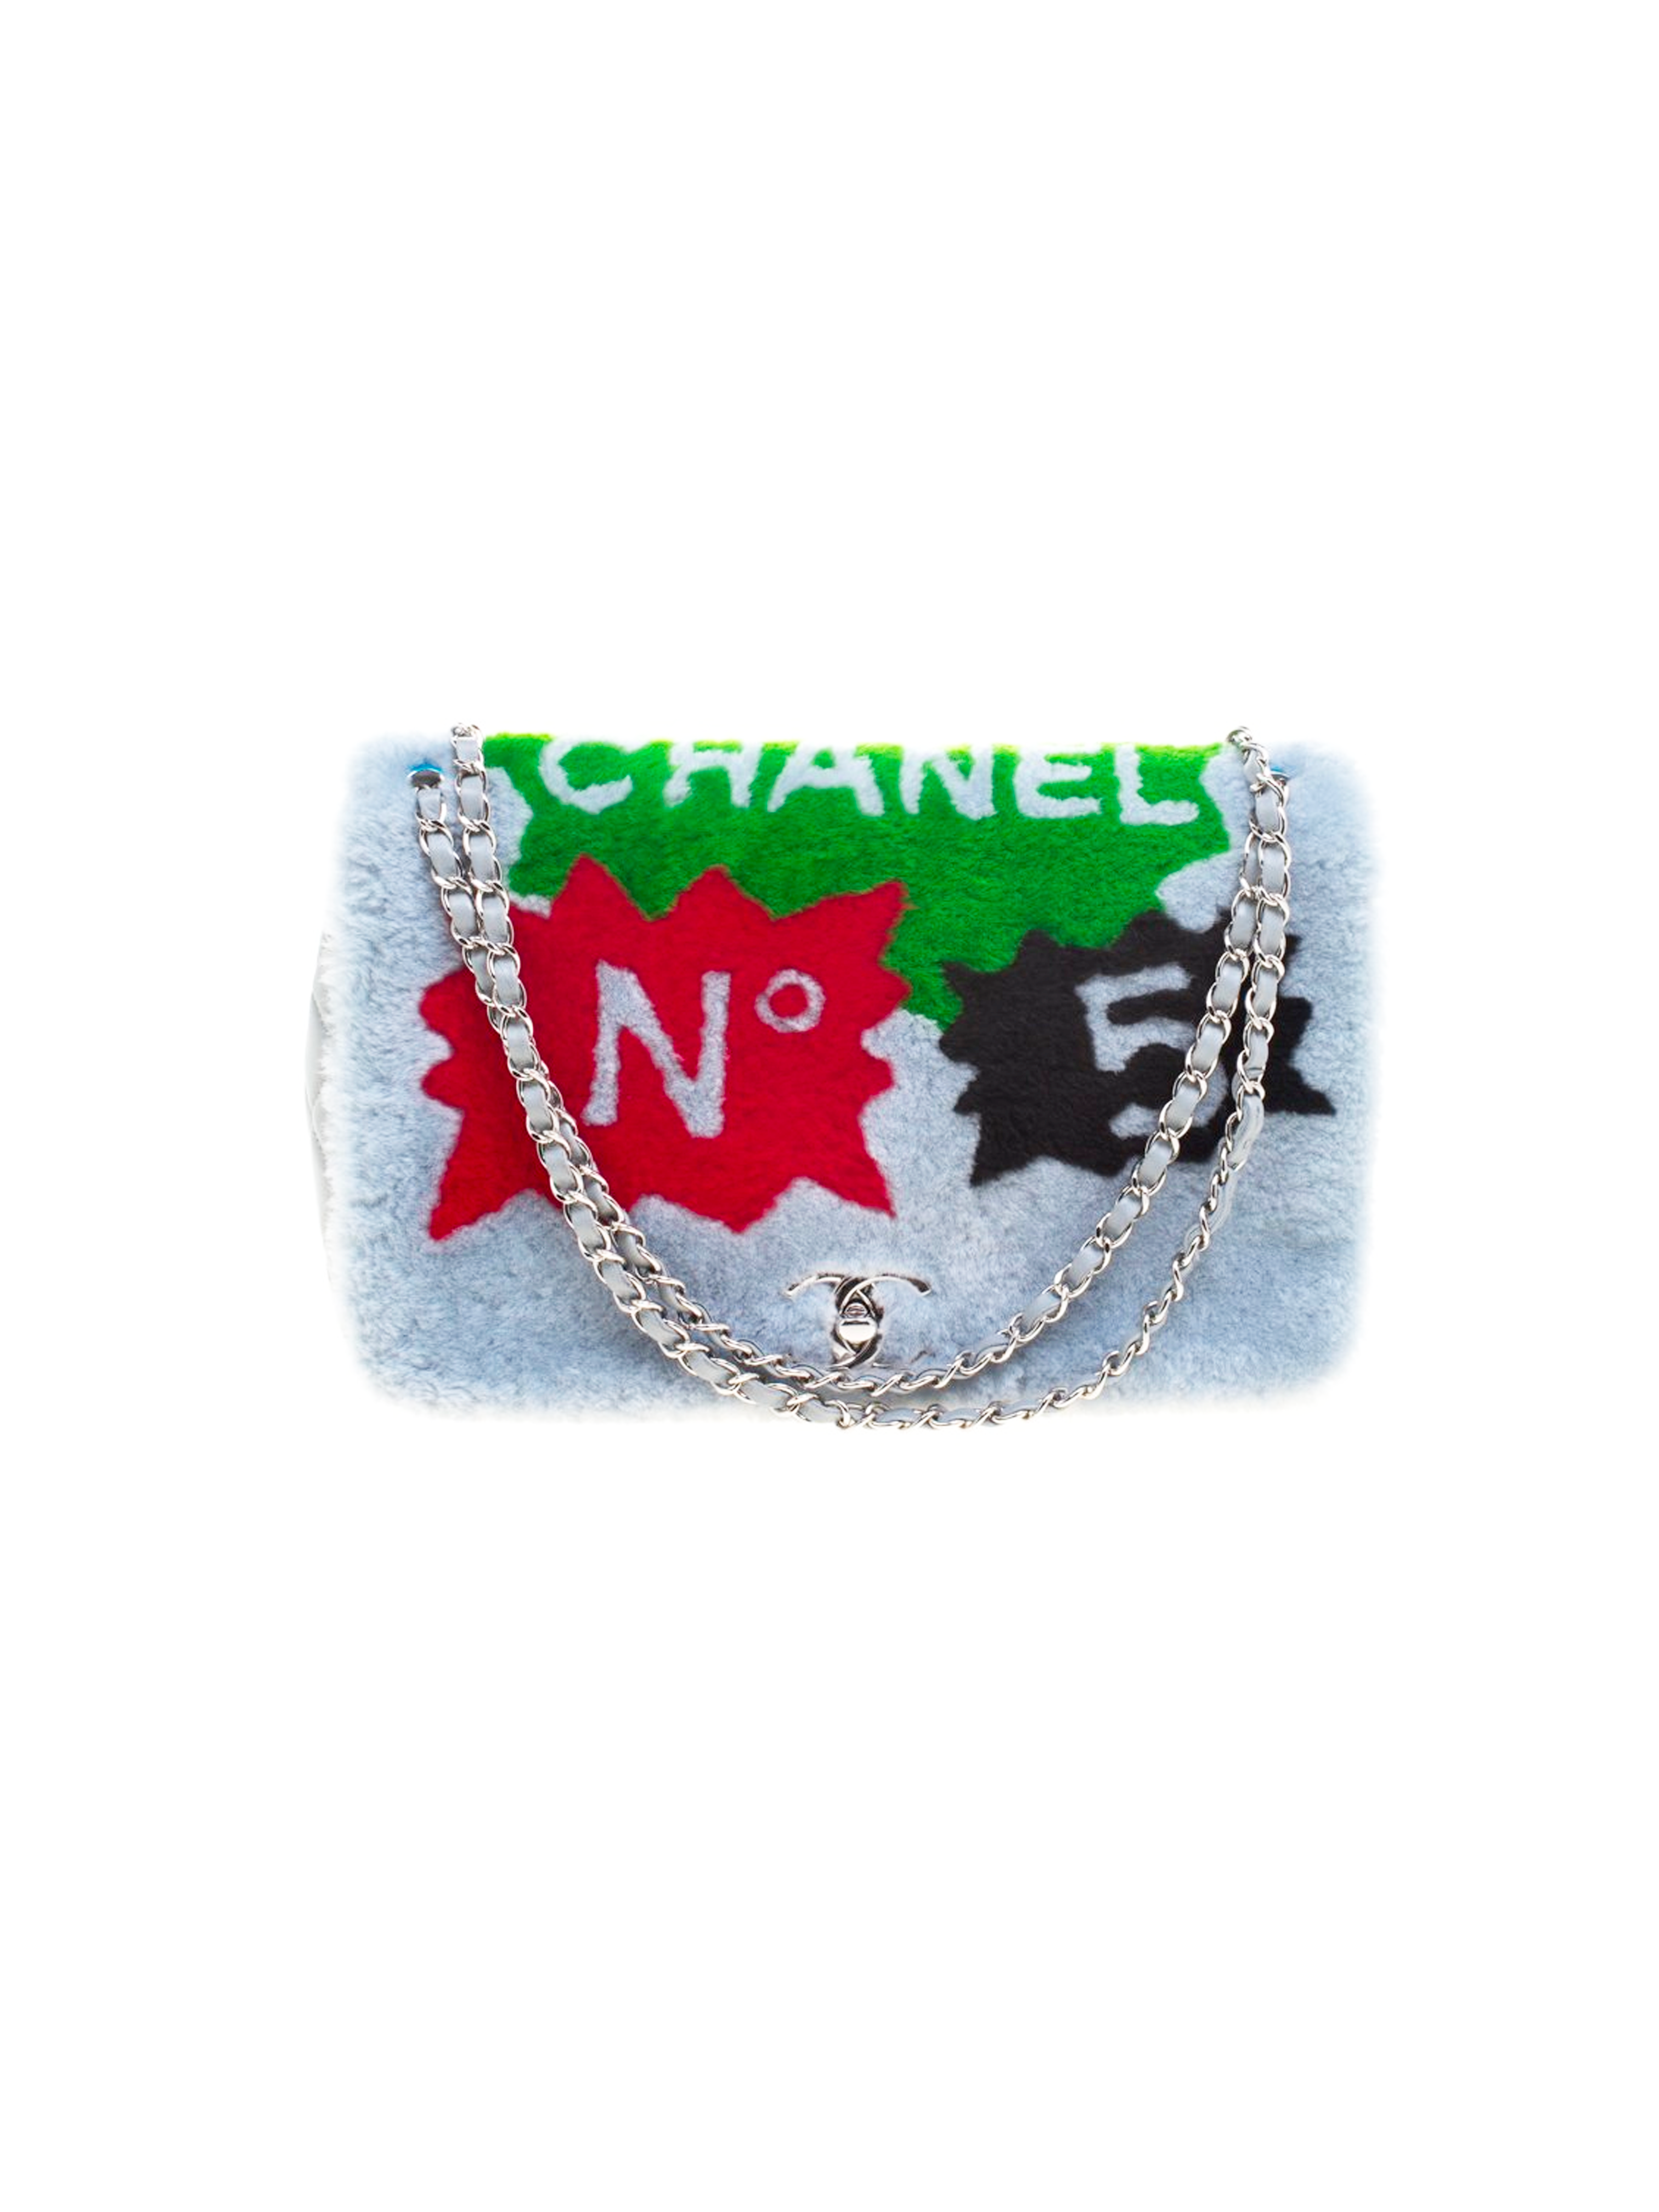 Chanel 2013 Light Blue Rare Shearling Pop-Art Flap Bag